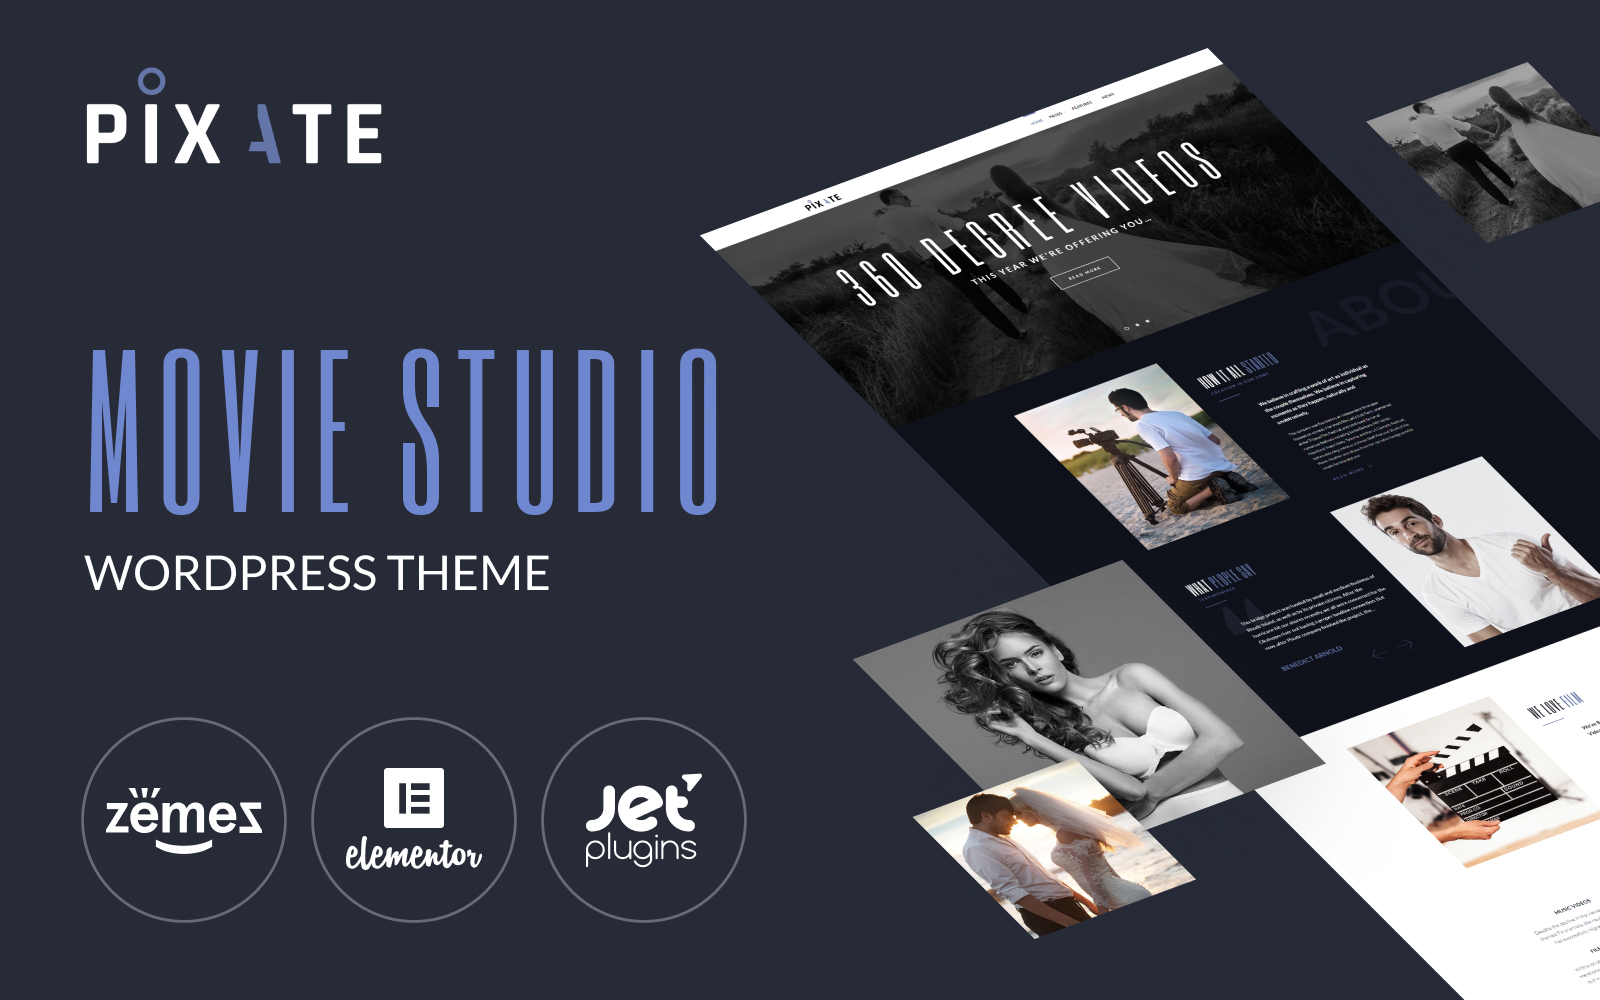 Pixate - Movie Studio WordPress theme WordPress Theme